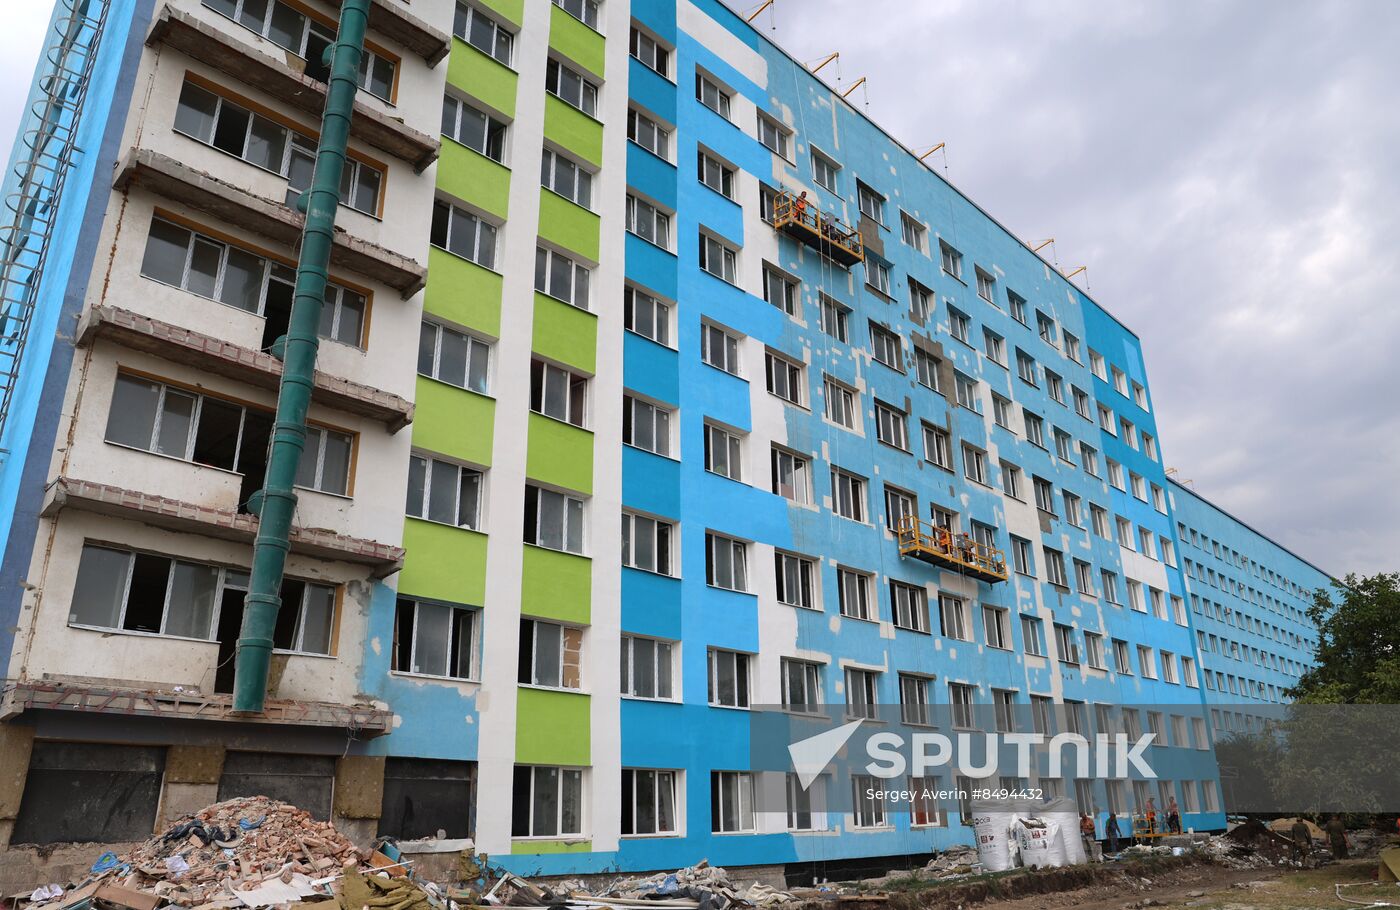 Russia DPR Hospital Construction